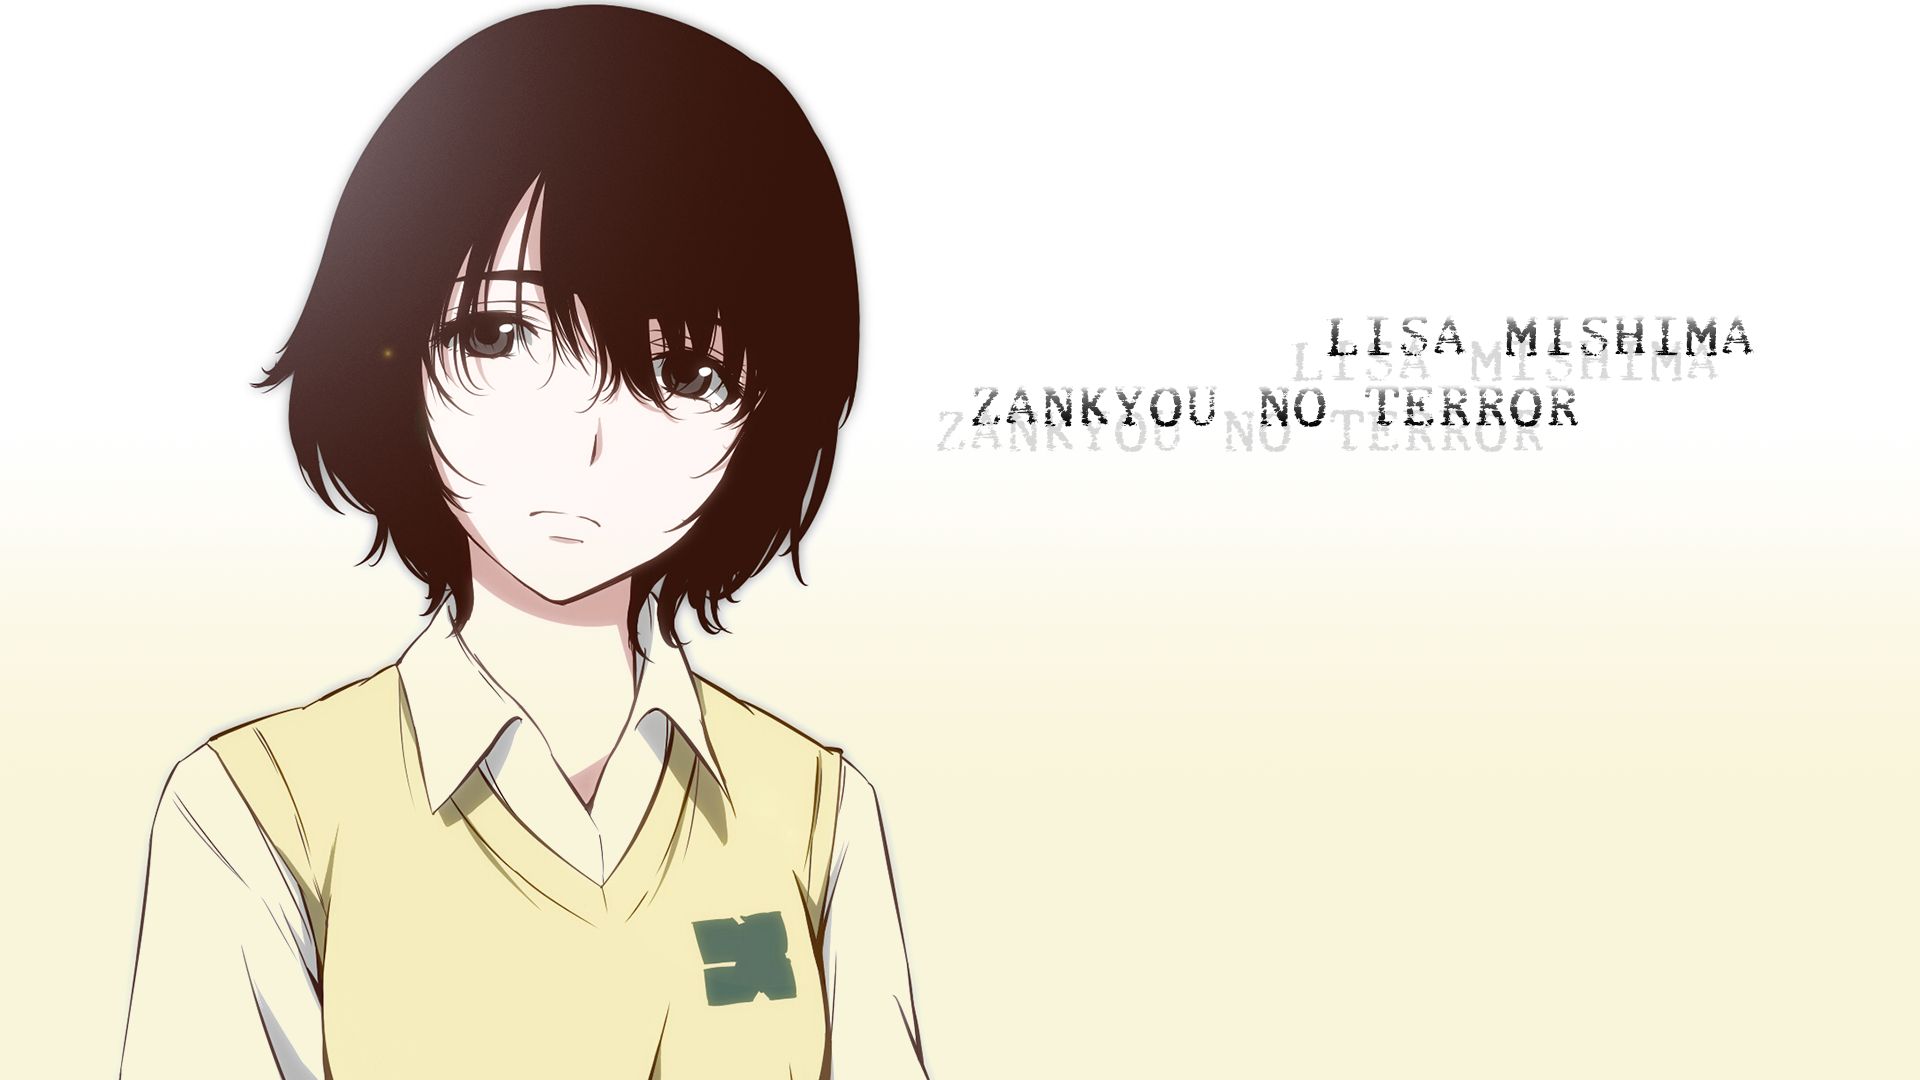 Lisa Mishima аниме: Zankyou no Terror